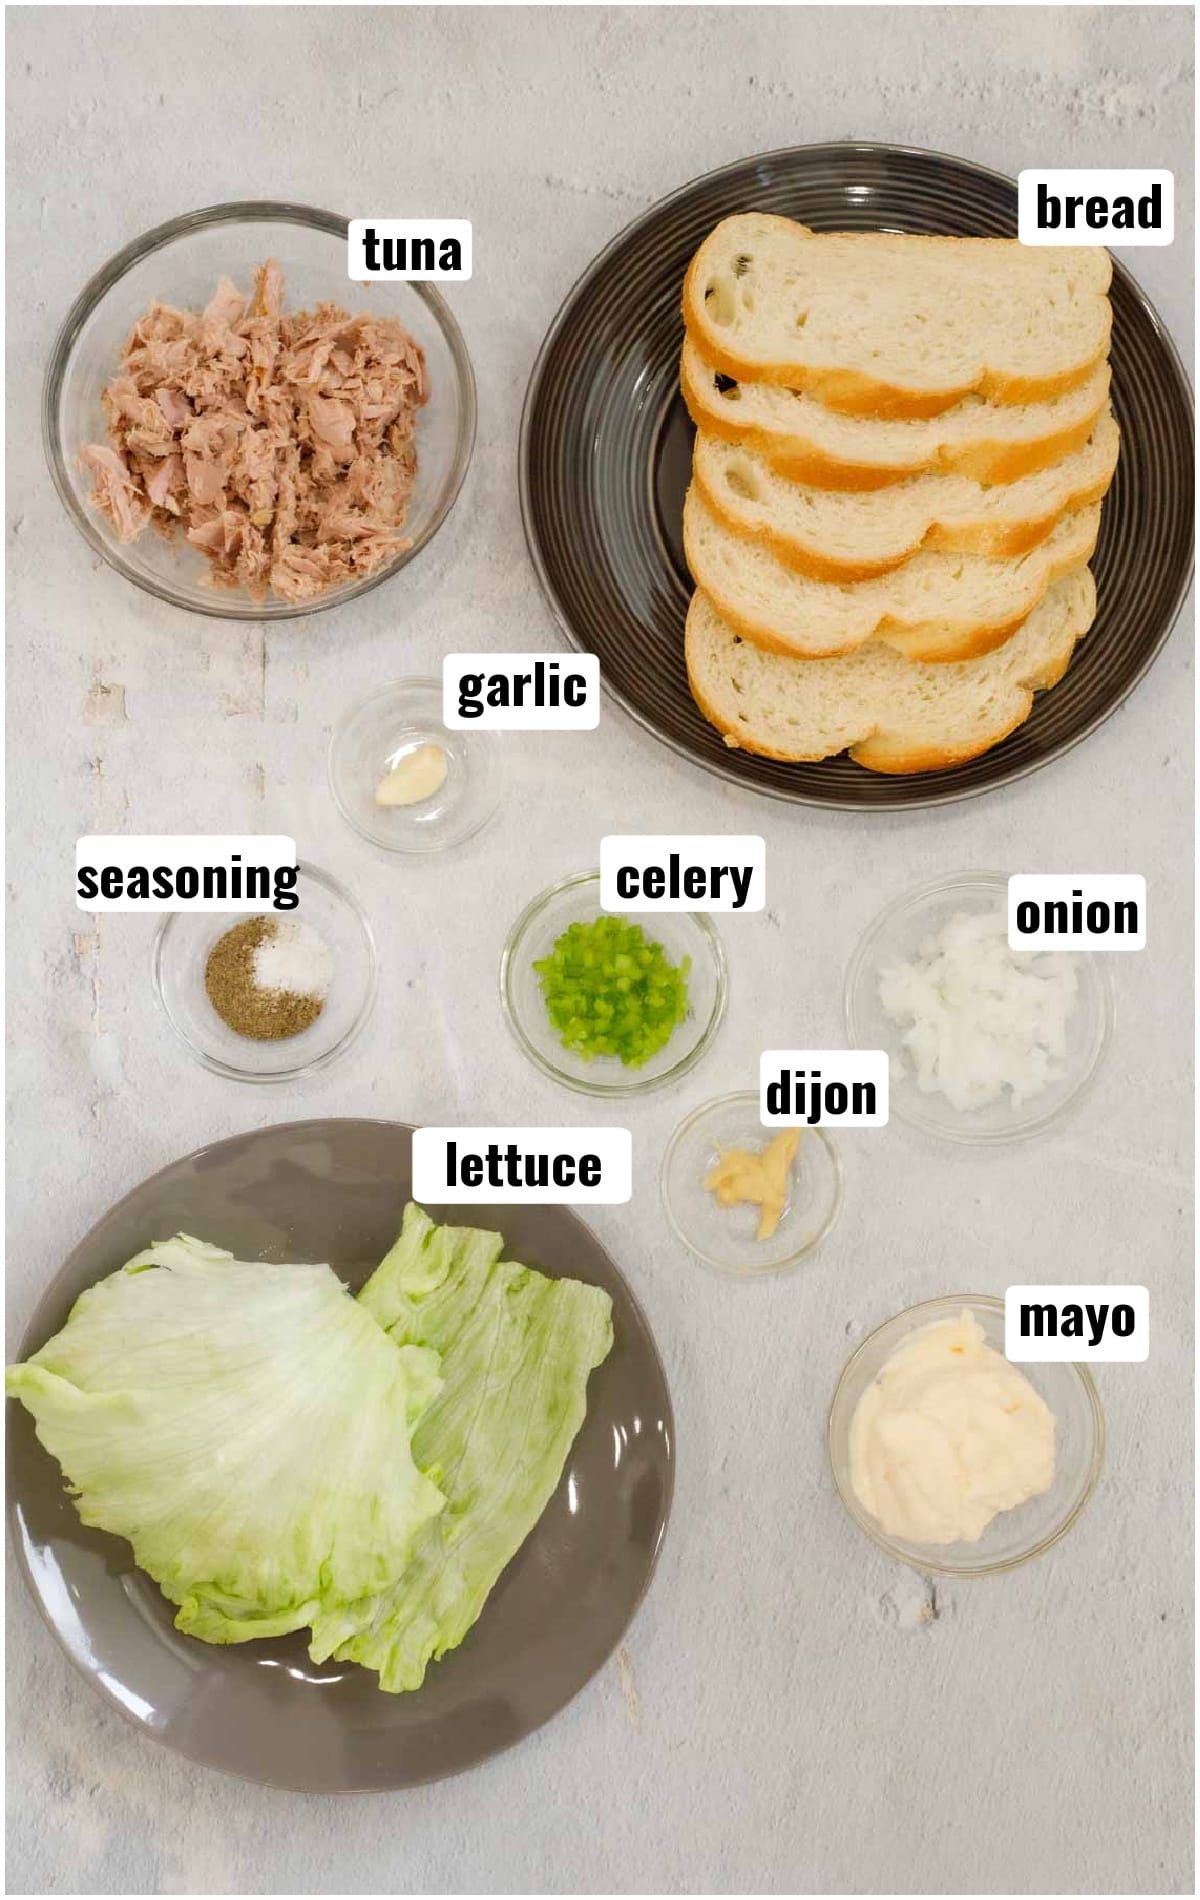 All ingredients needed to make tuna sandwiches in ramekins.